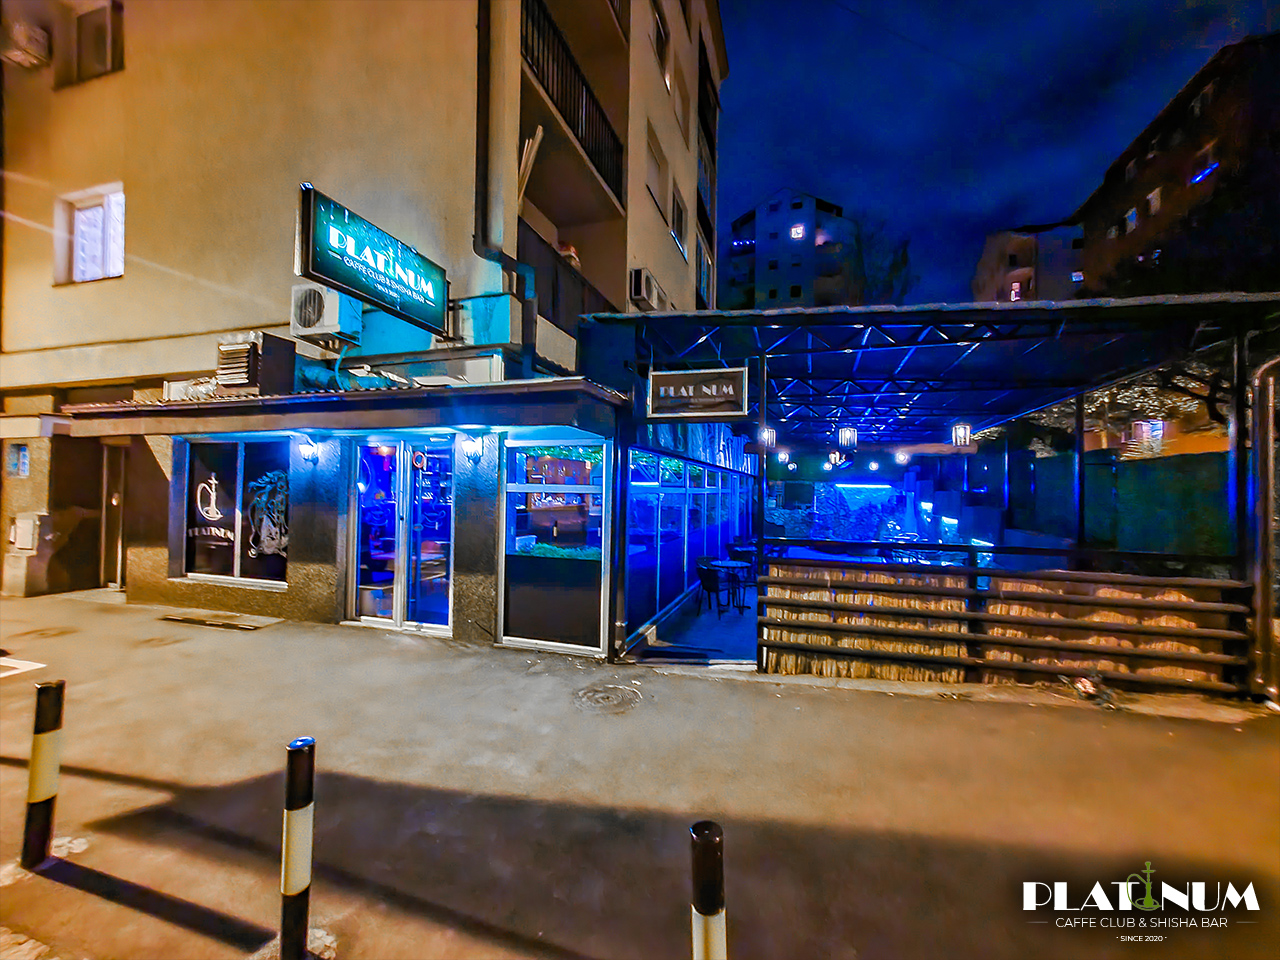 Photo 1 - PLATINUM CAFFE CLUB & SHISHA BAR Nargila bars Belgrade